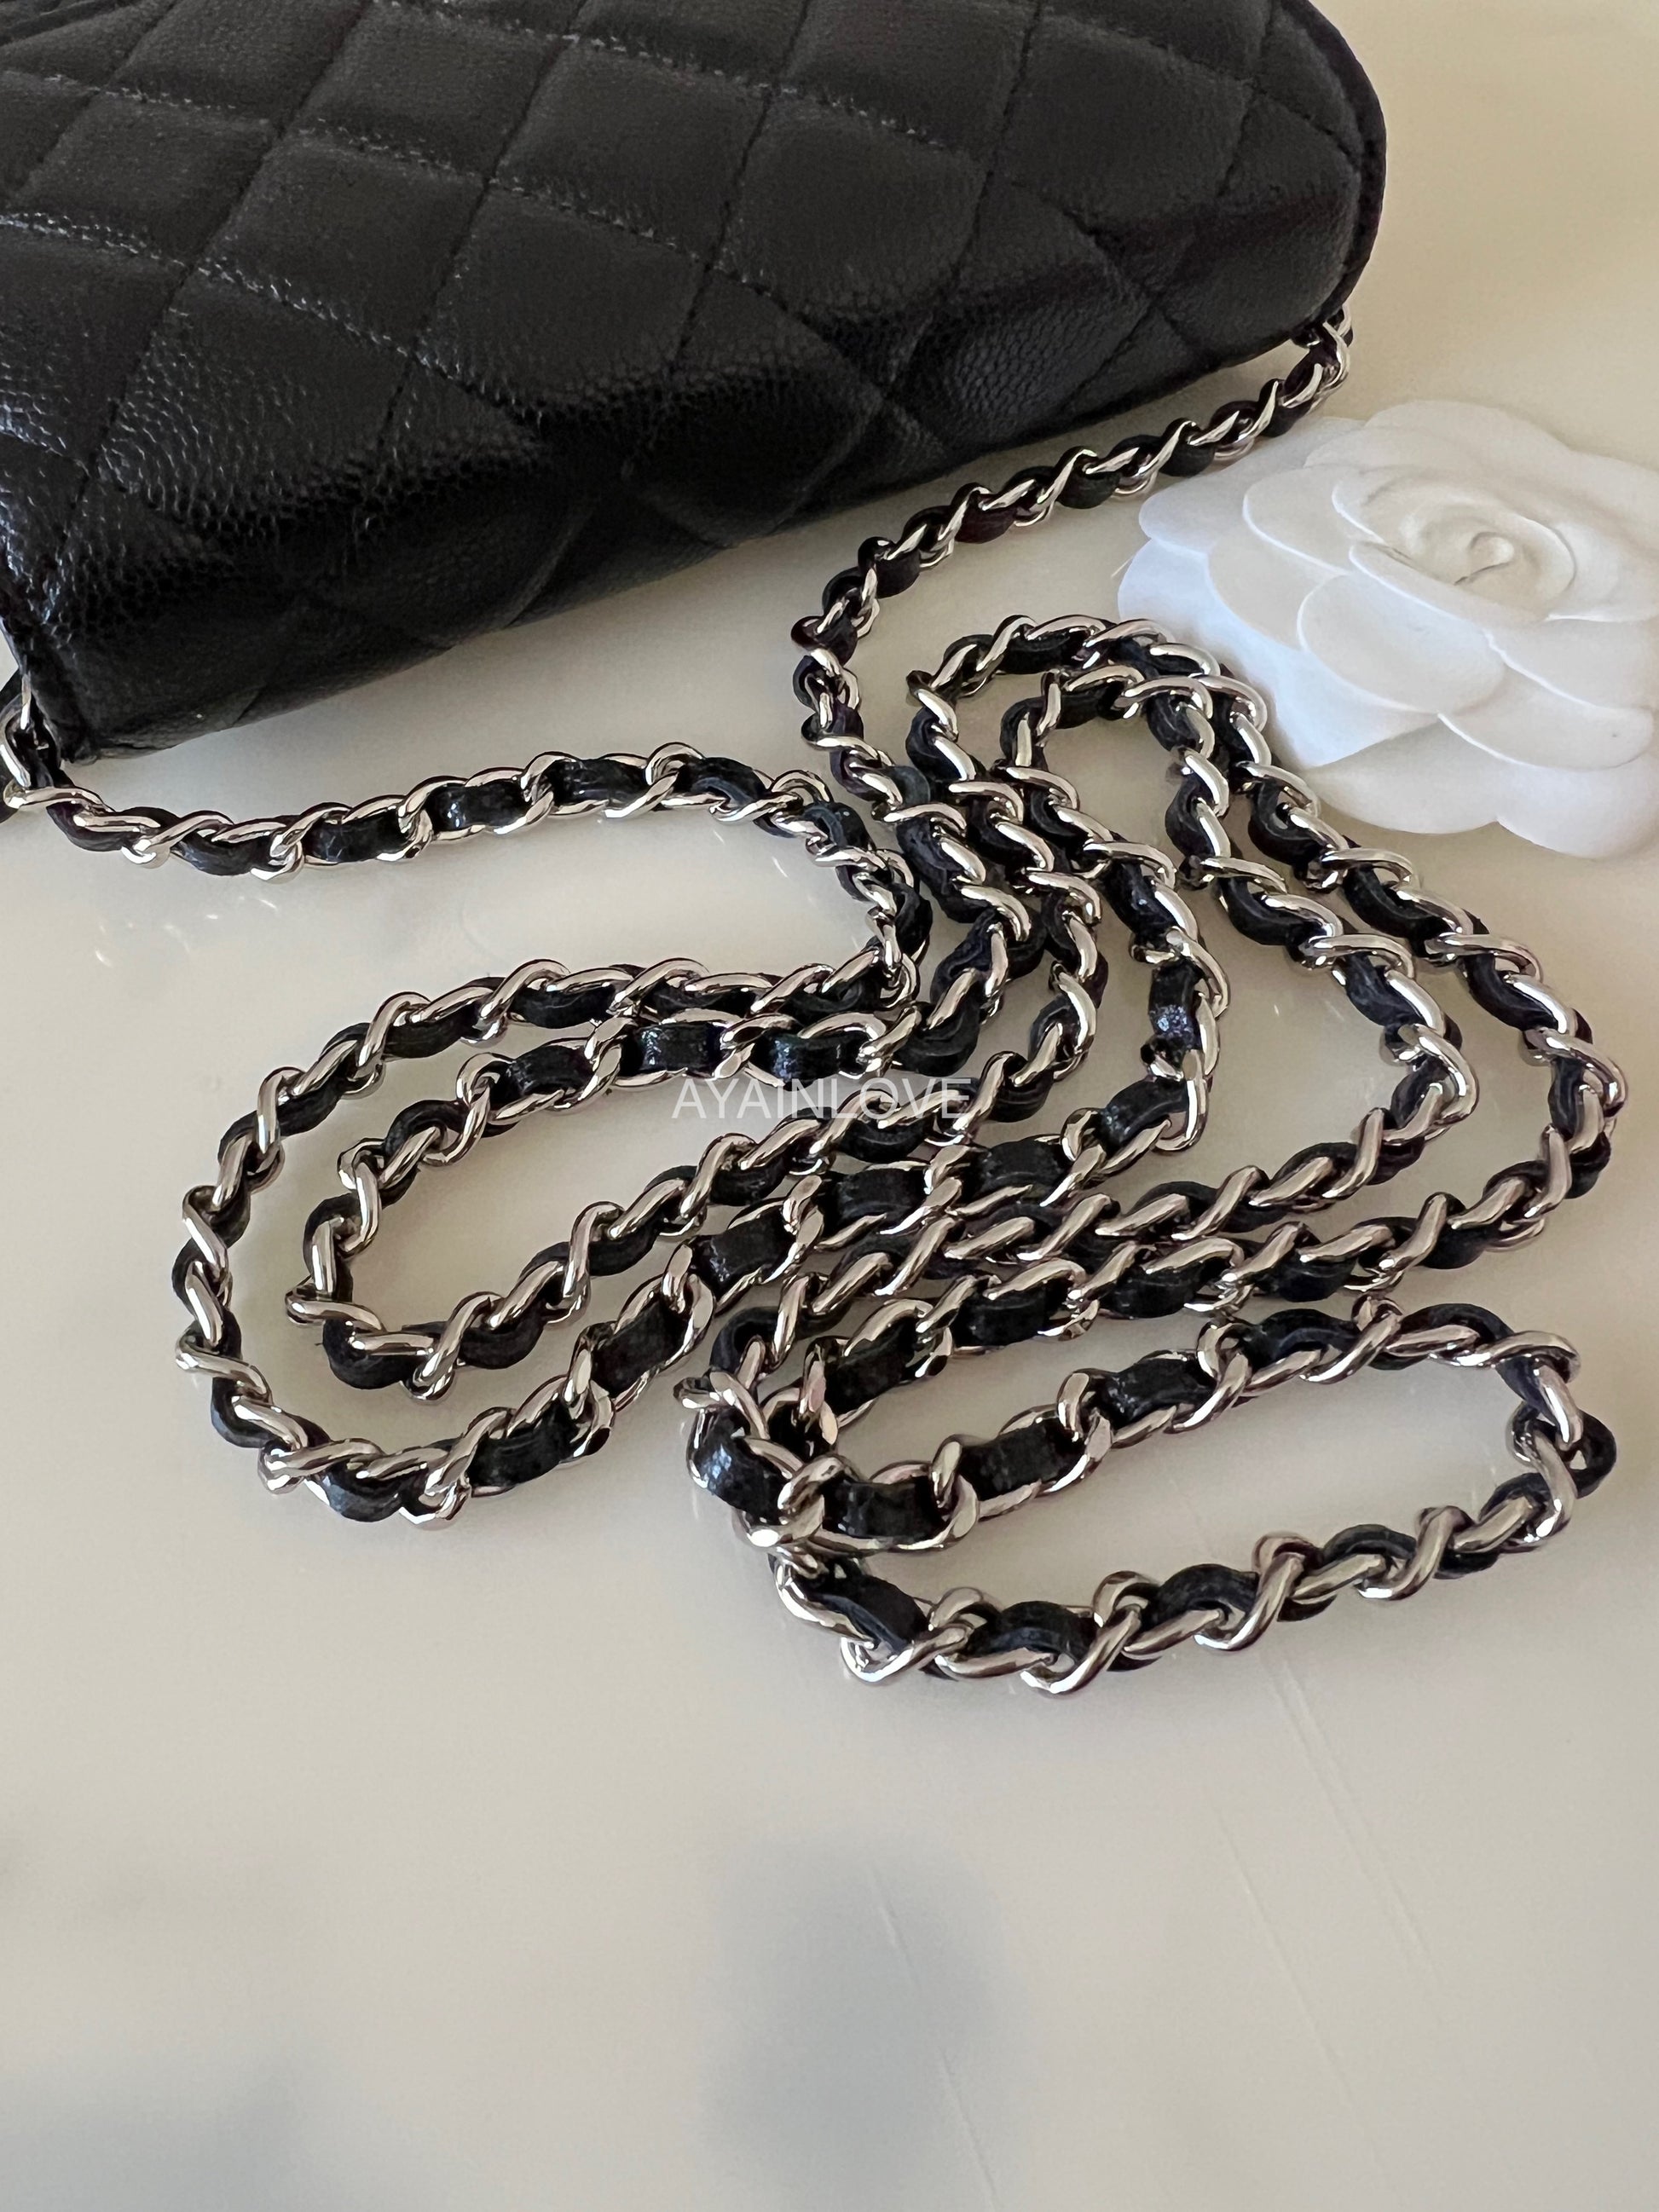 2020+Chanel+Classic+Flap+Bag+Wallet+On+Chain+%2FBlack+Caviar